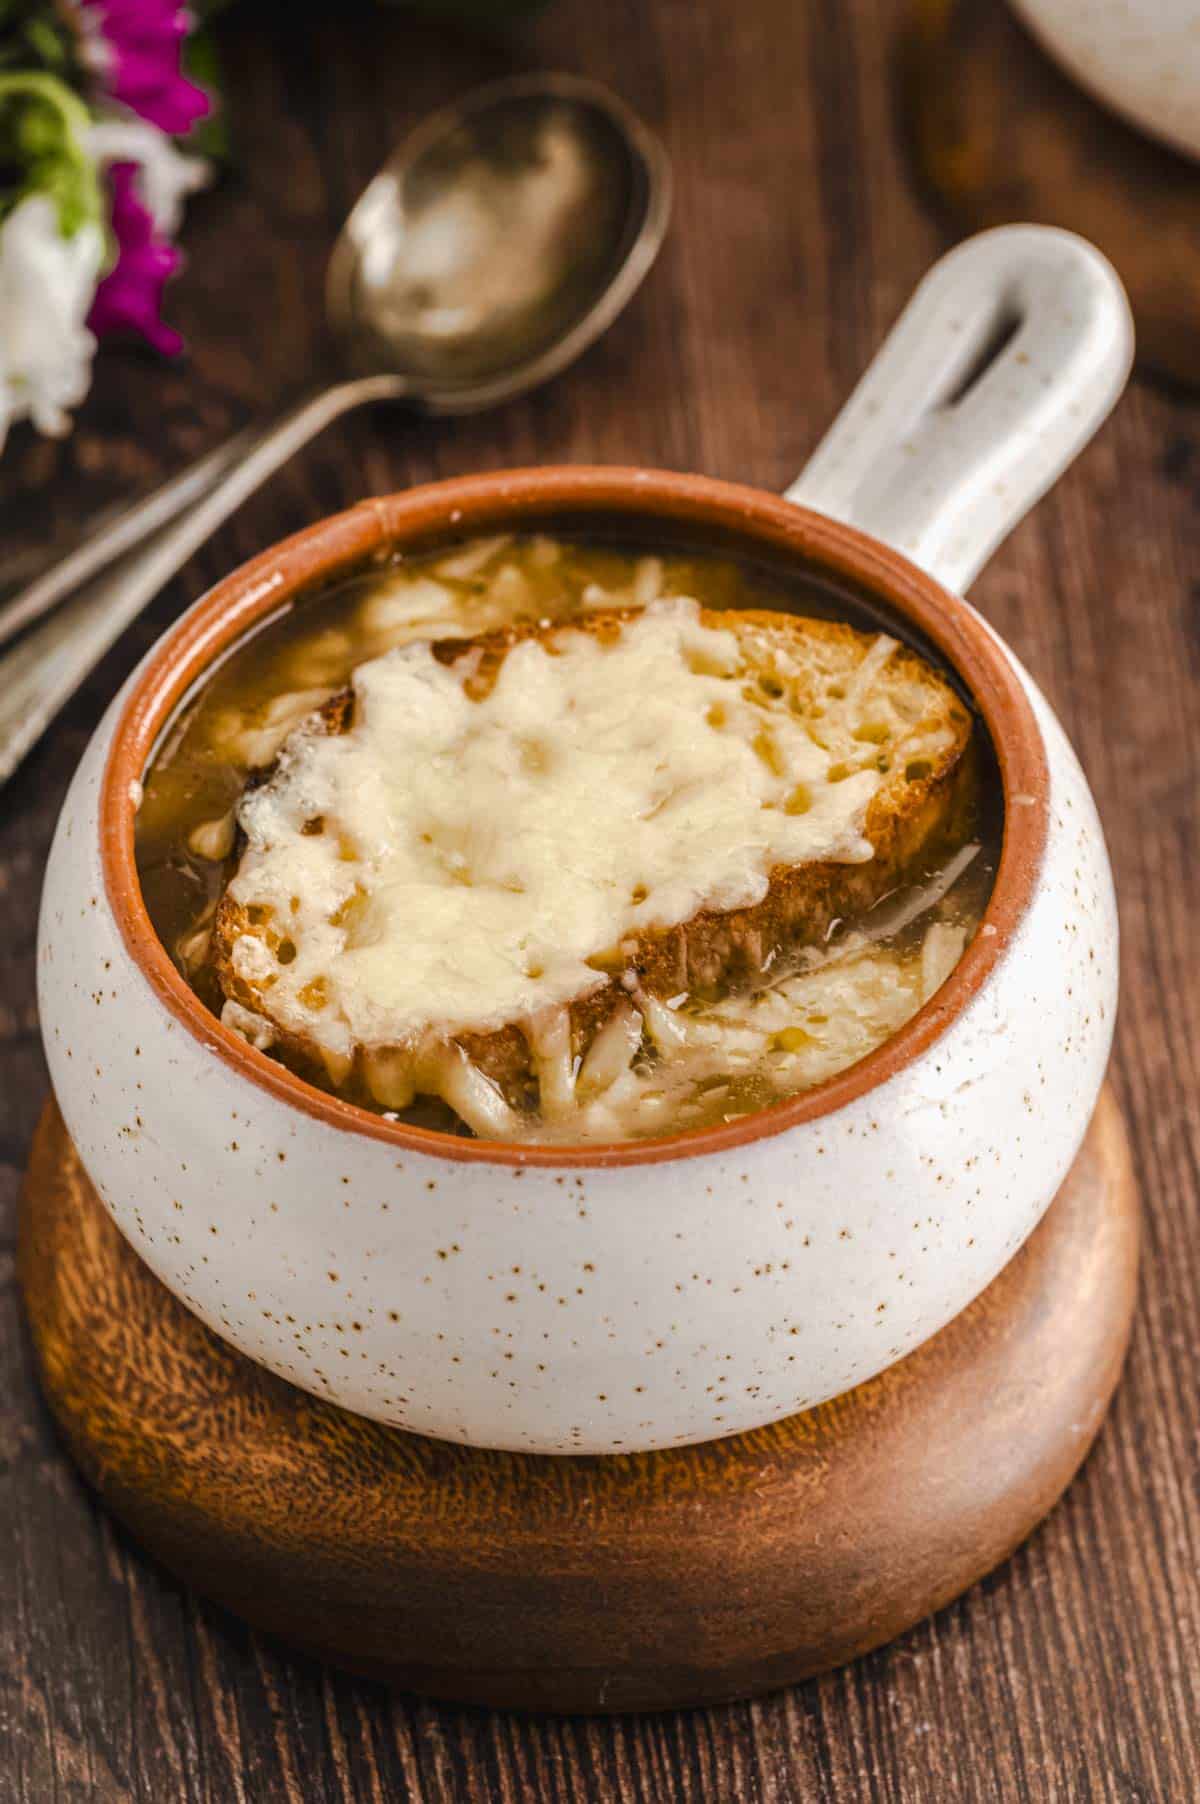 https://mayihavethatrecipe.com/wp-content/uploads/2016/01/Vegetarian-French-Onion-Soup-52.jpg